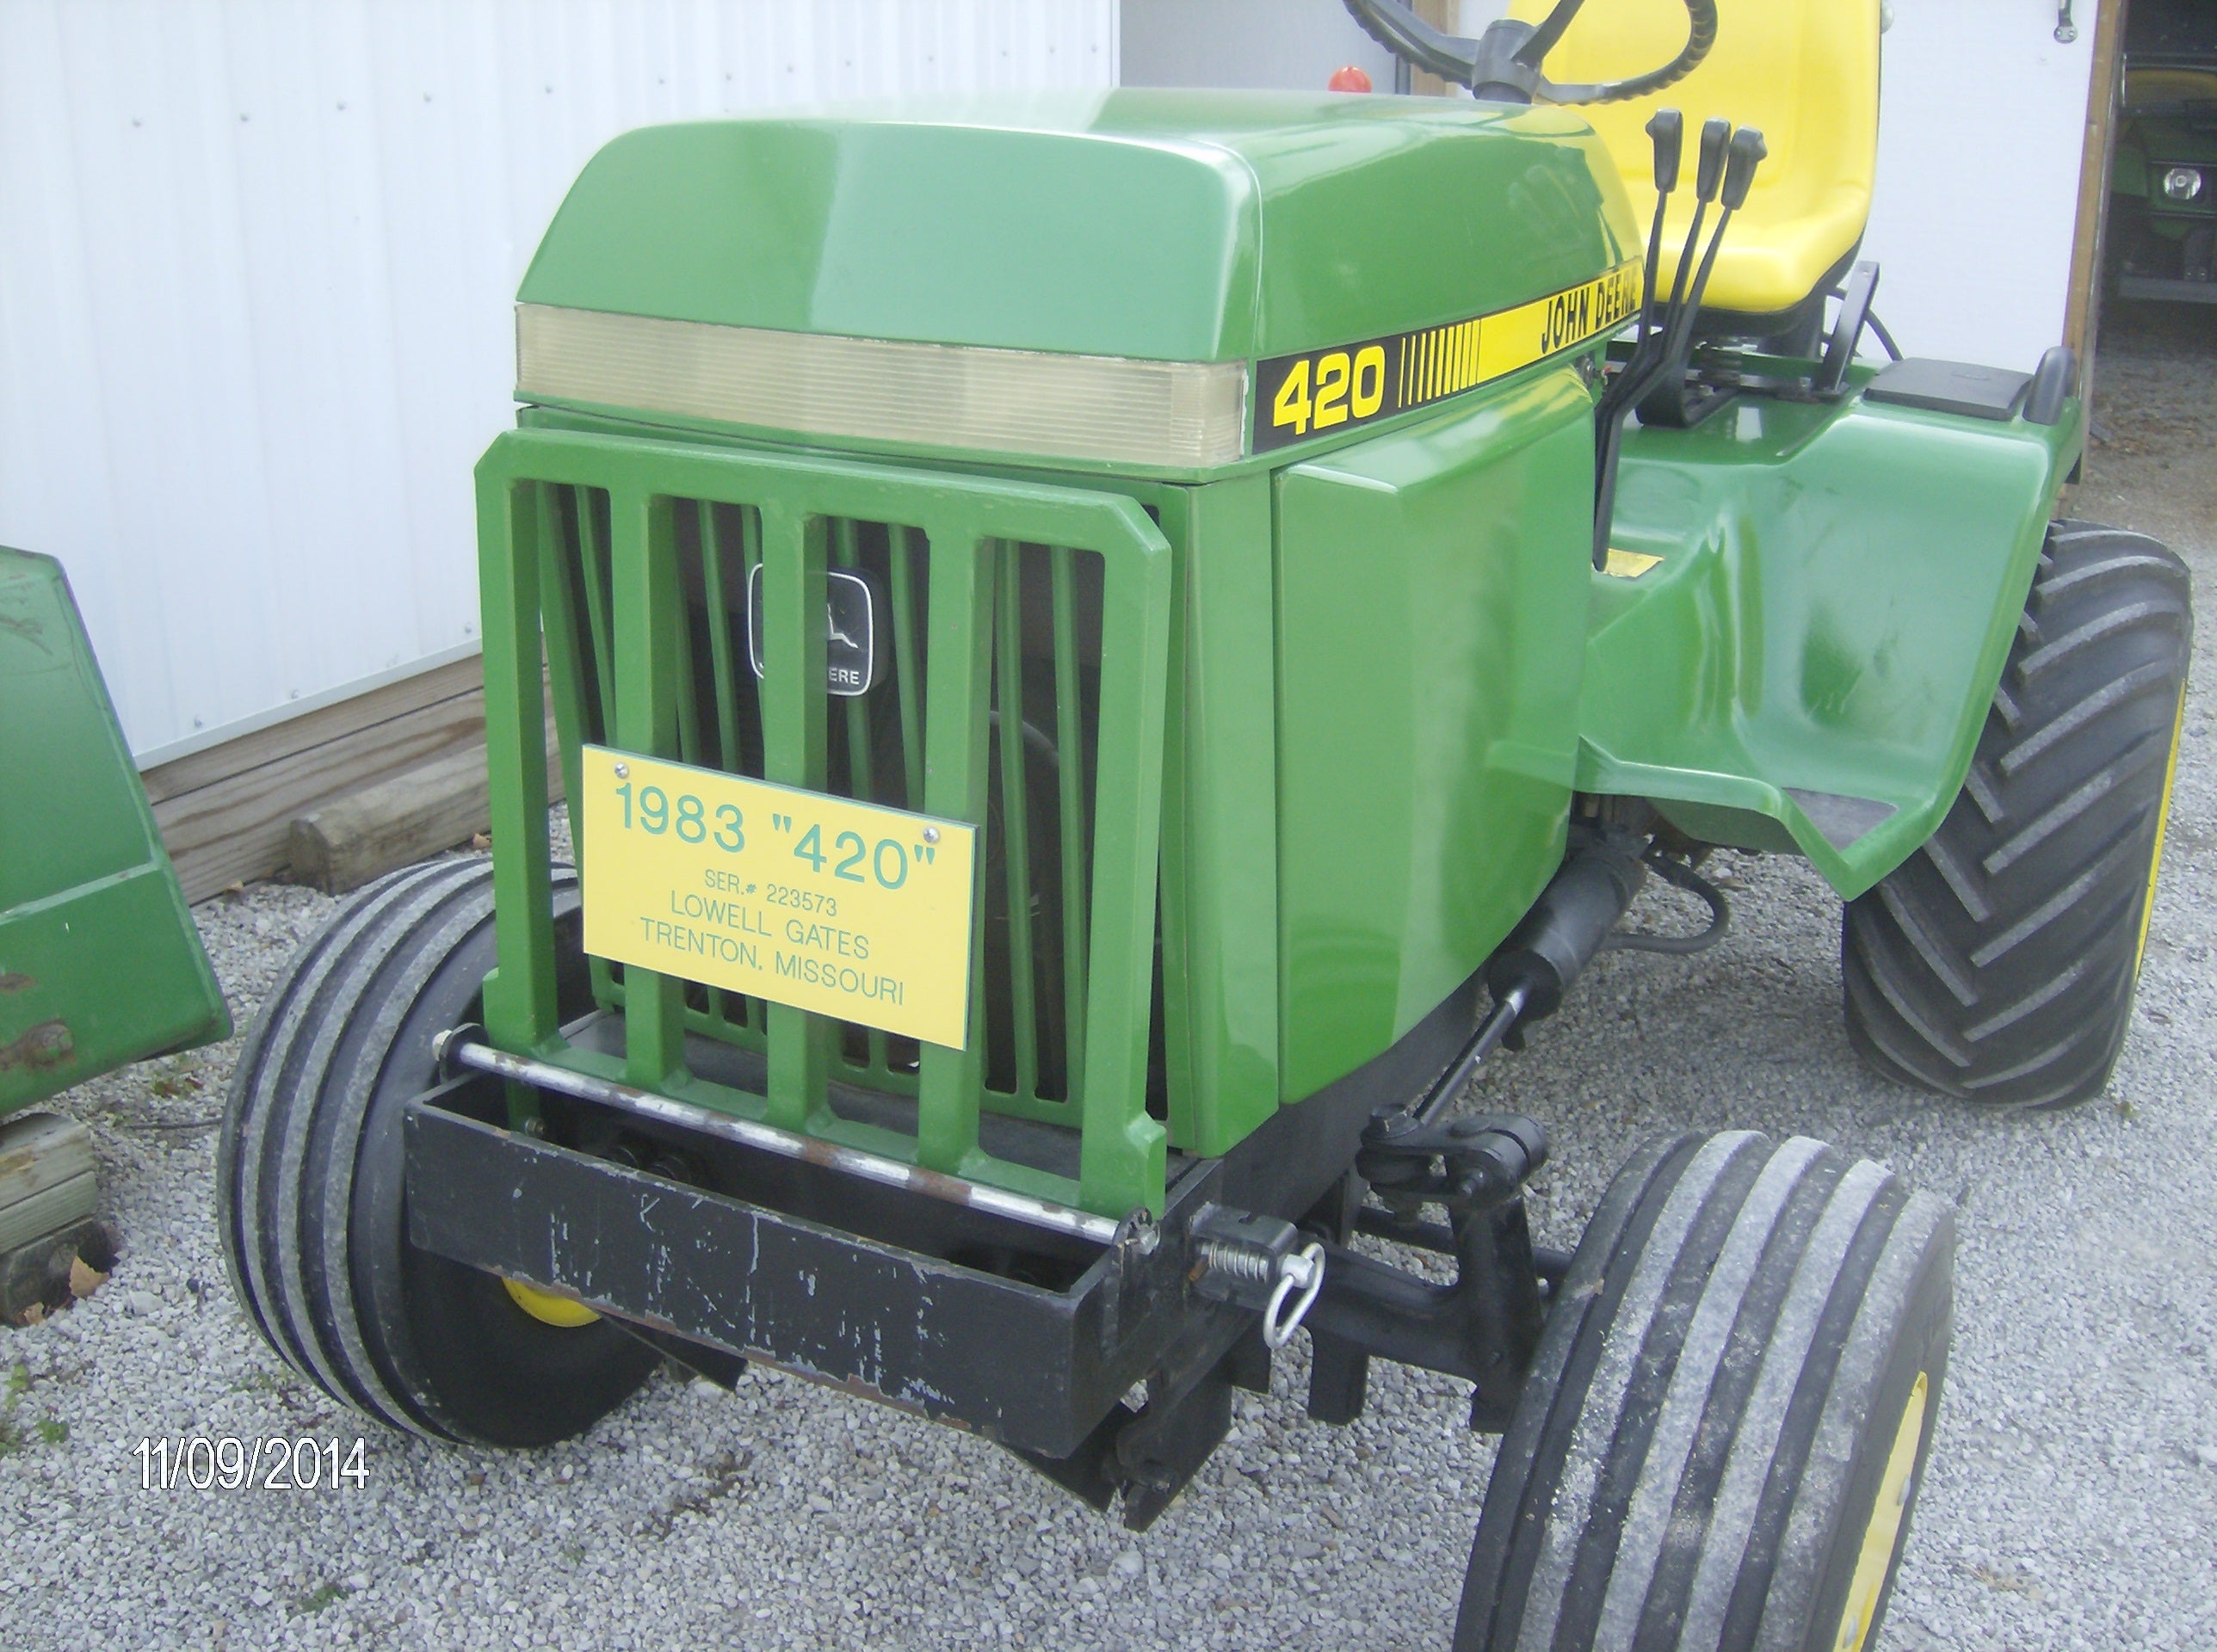 For Sale In North Missouri 1983 Jd 420 Garden Tractor Green